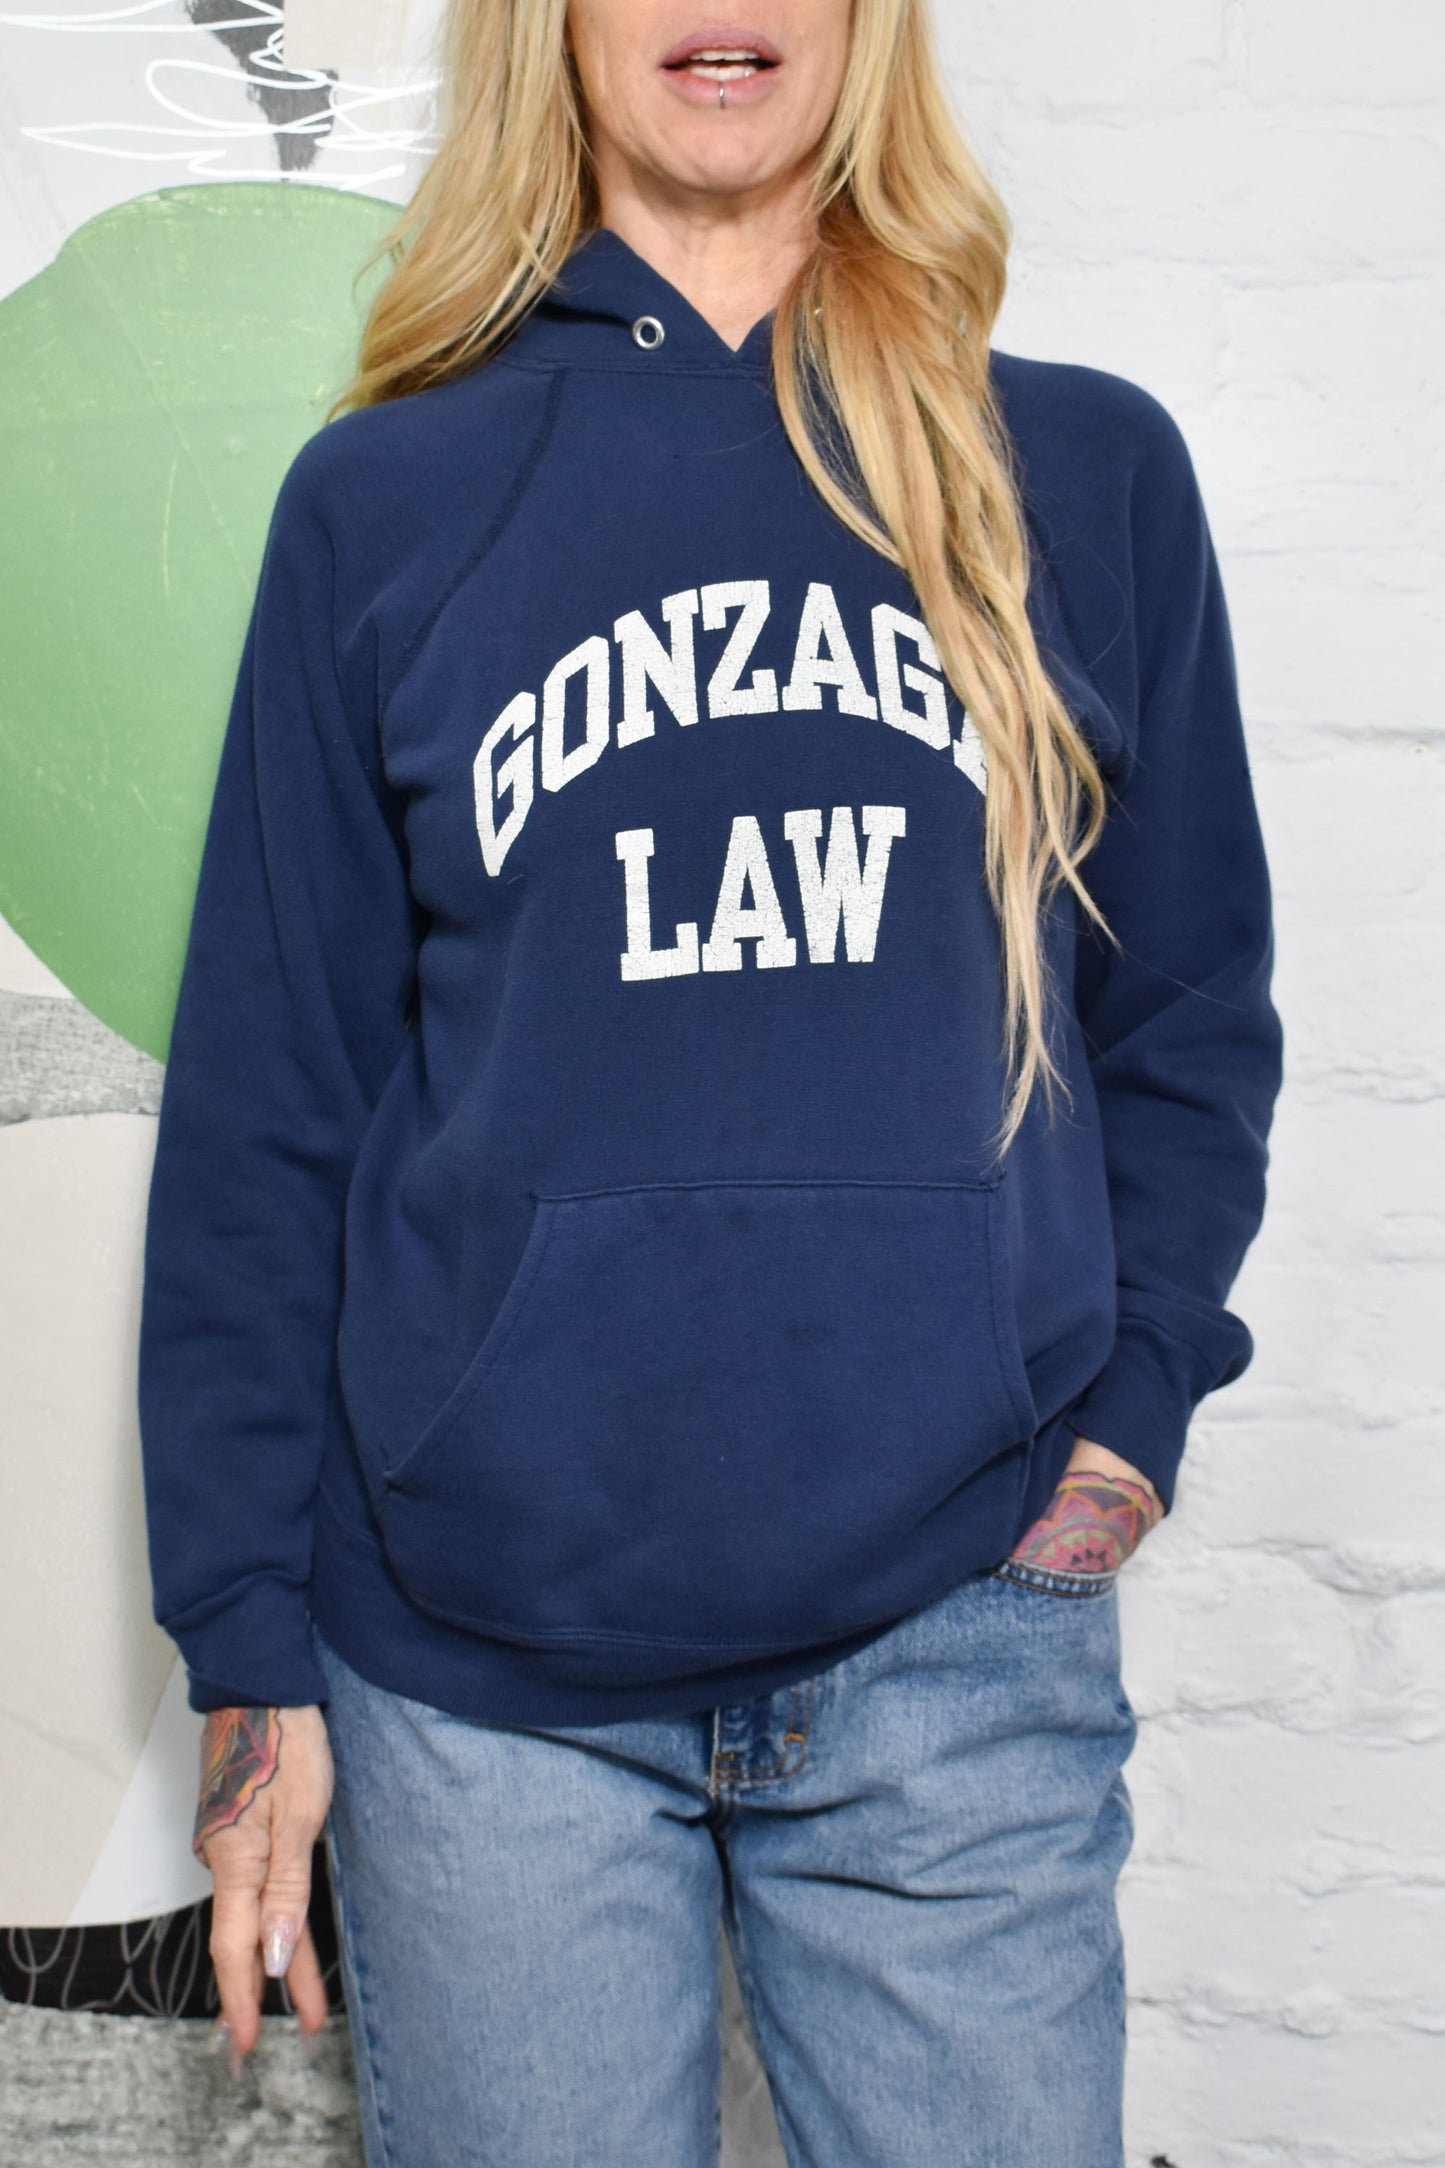 Vintage 1980's "Champion" Gonzaga Law Hooded Sweatshirt